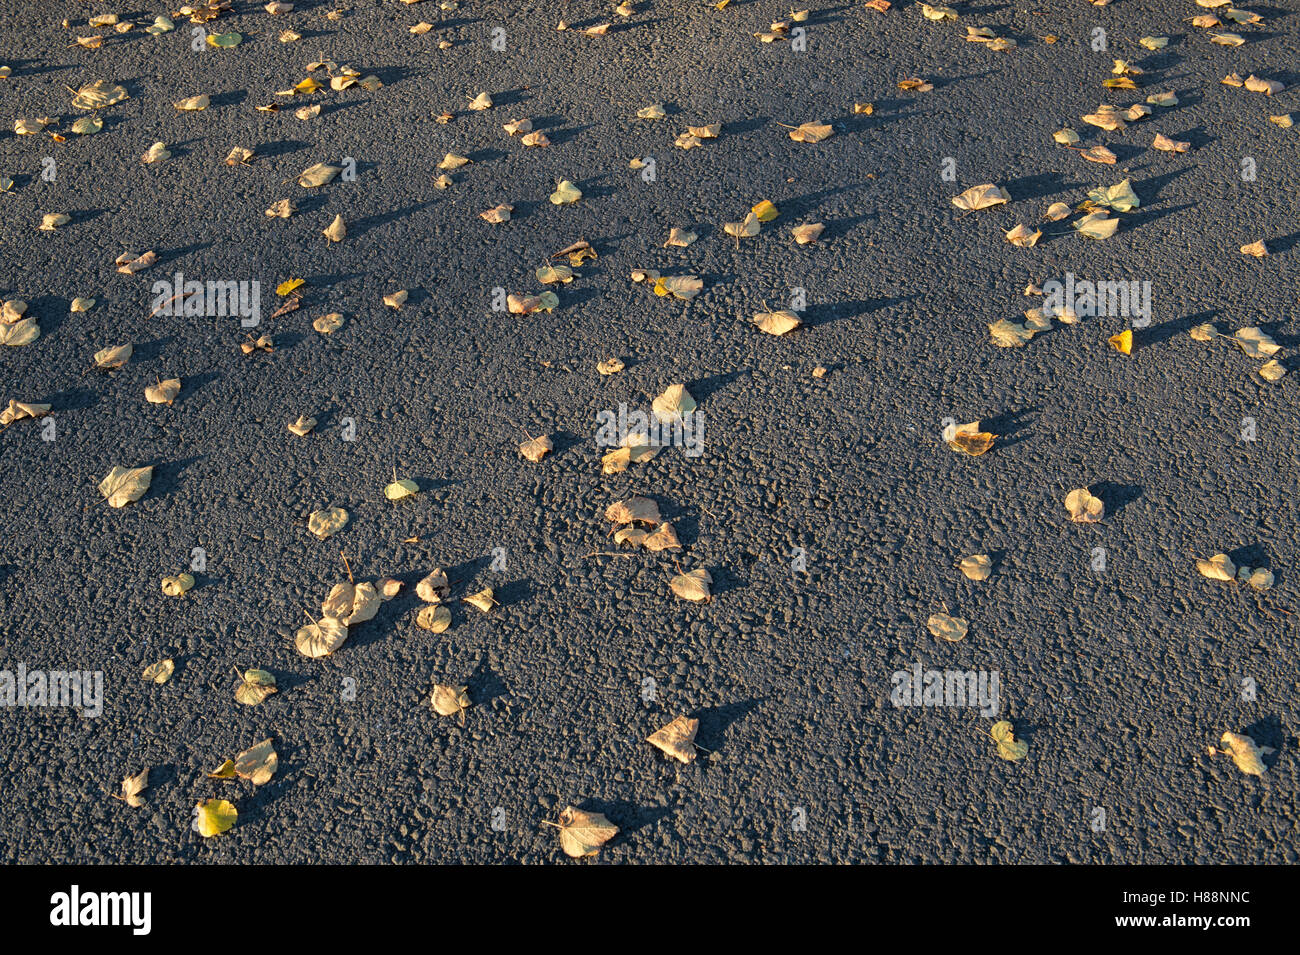 Fallen autumn leaves with shadows on tarmac Stock Photo